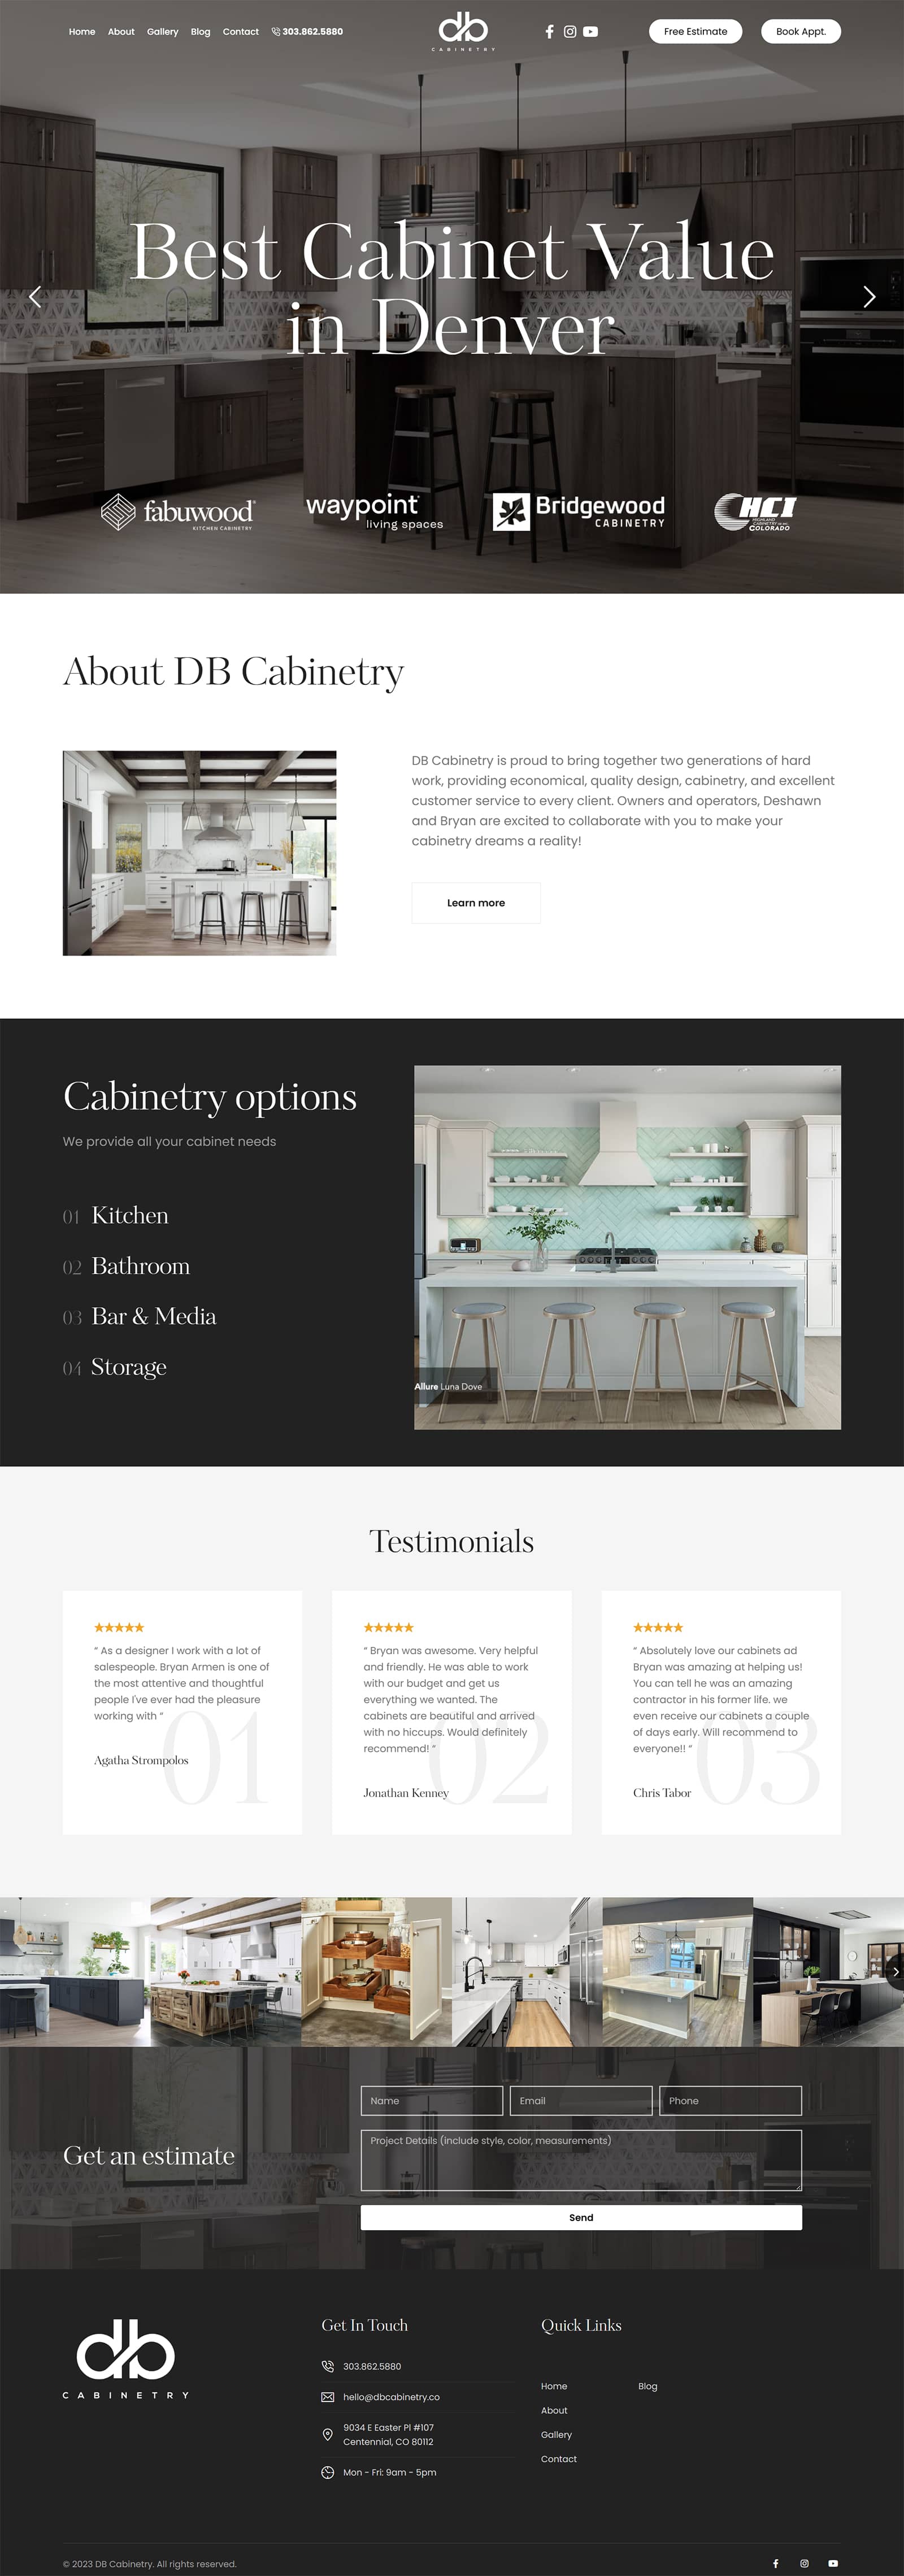 db cabinetry full web design